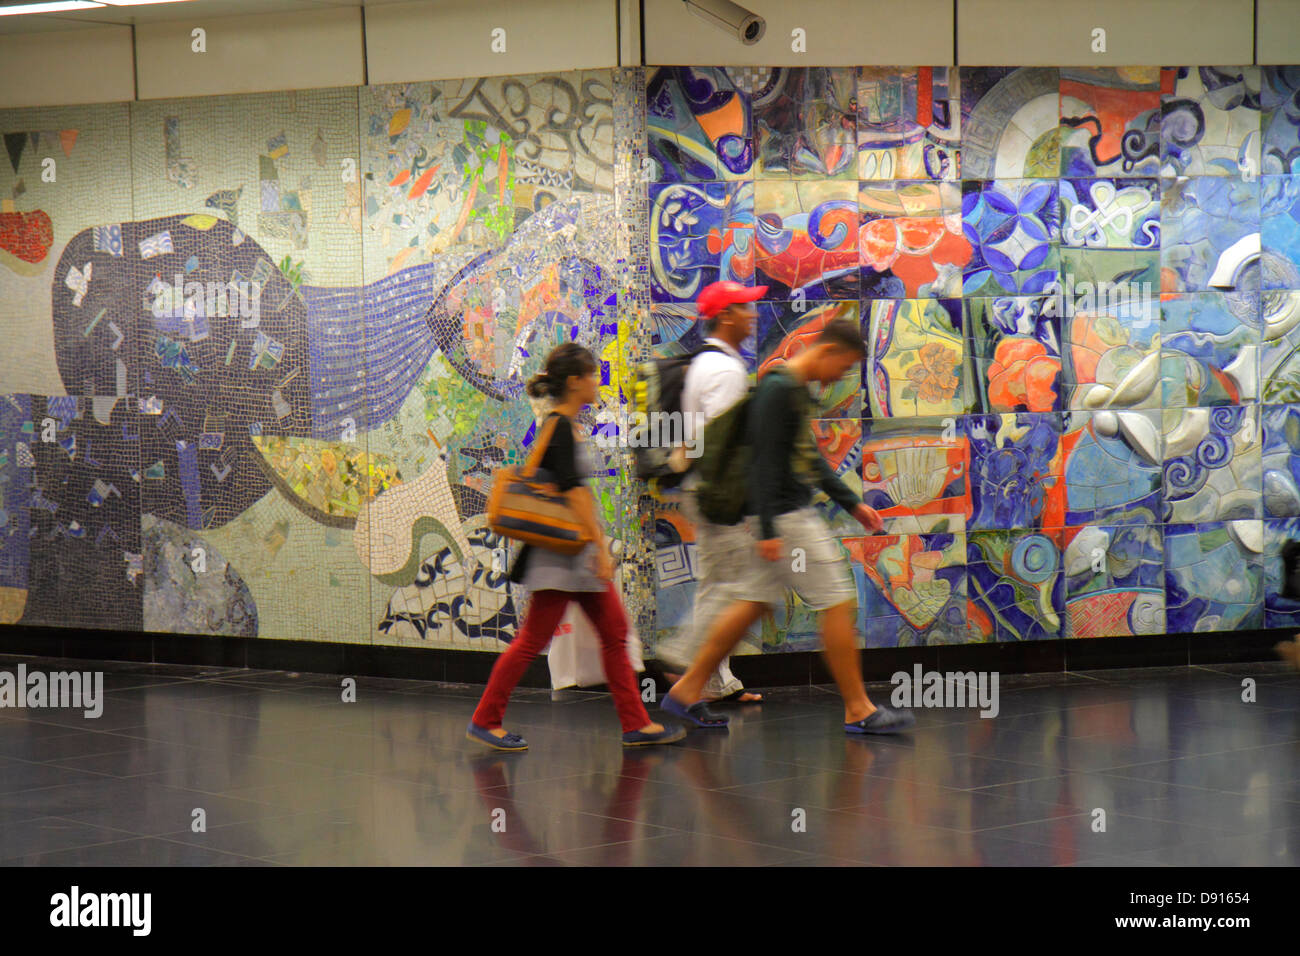 Singapore Dhoby Ghaut MRT Station,subway train,commuters,riders,Asian man men male,woman female women,mural,ceramic tile,public art,Sing130201242 Stock Photo